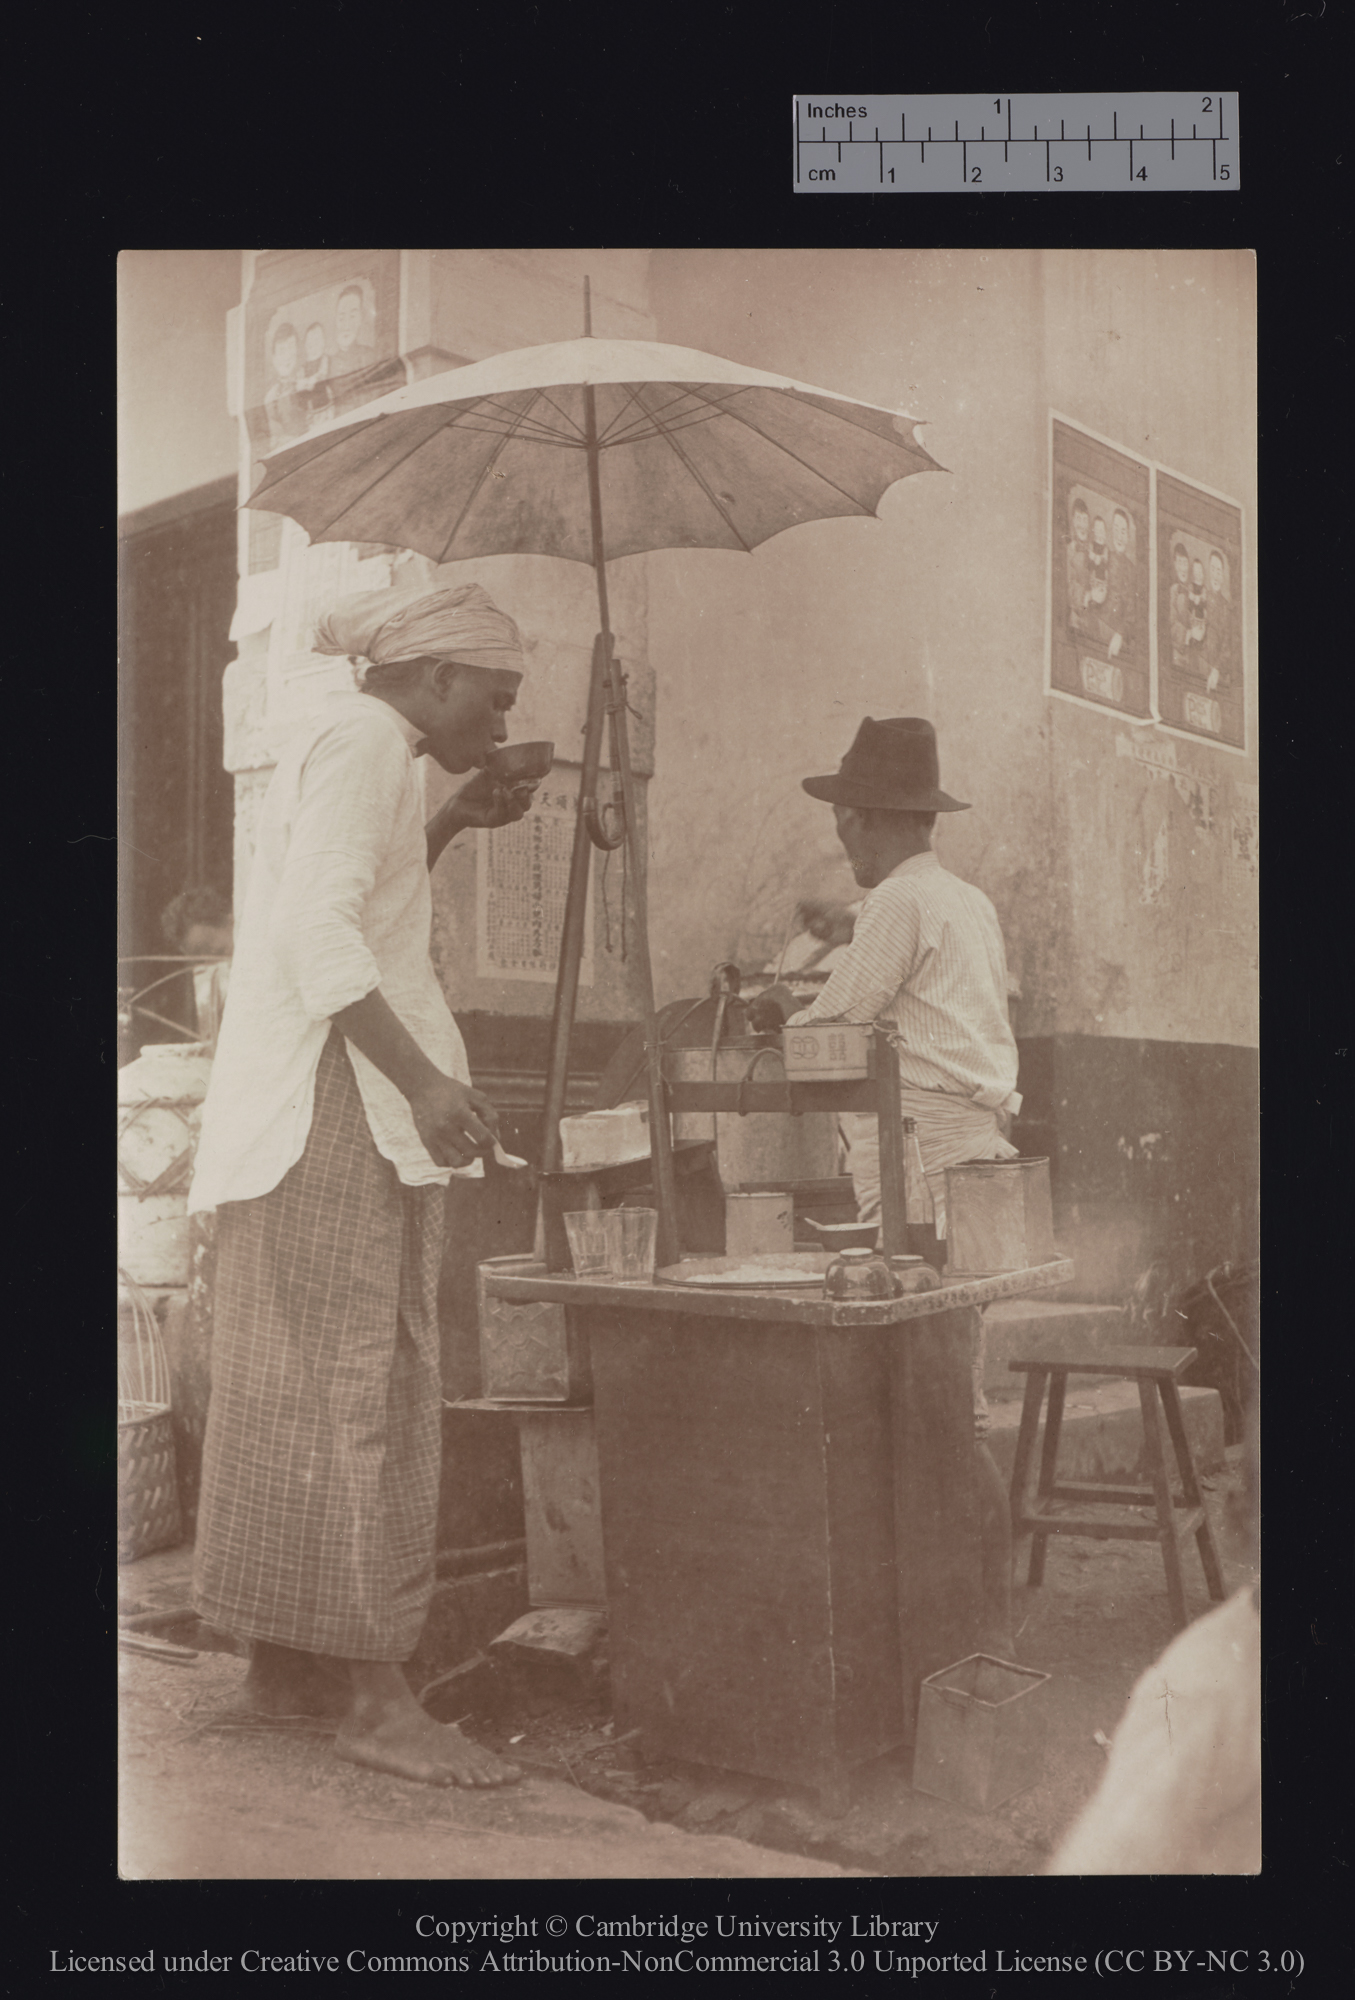 A Tamil enjoying a bowl of tea, 1910 - 1929